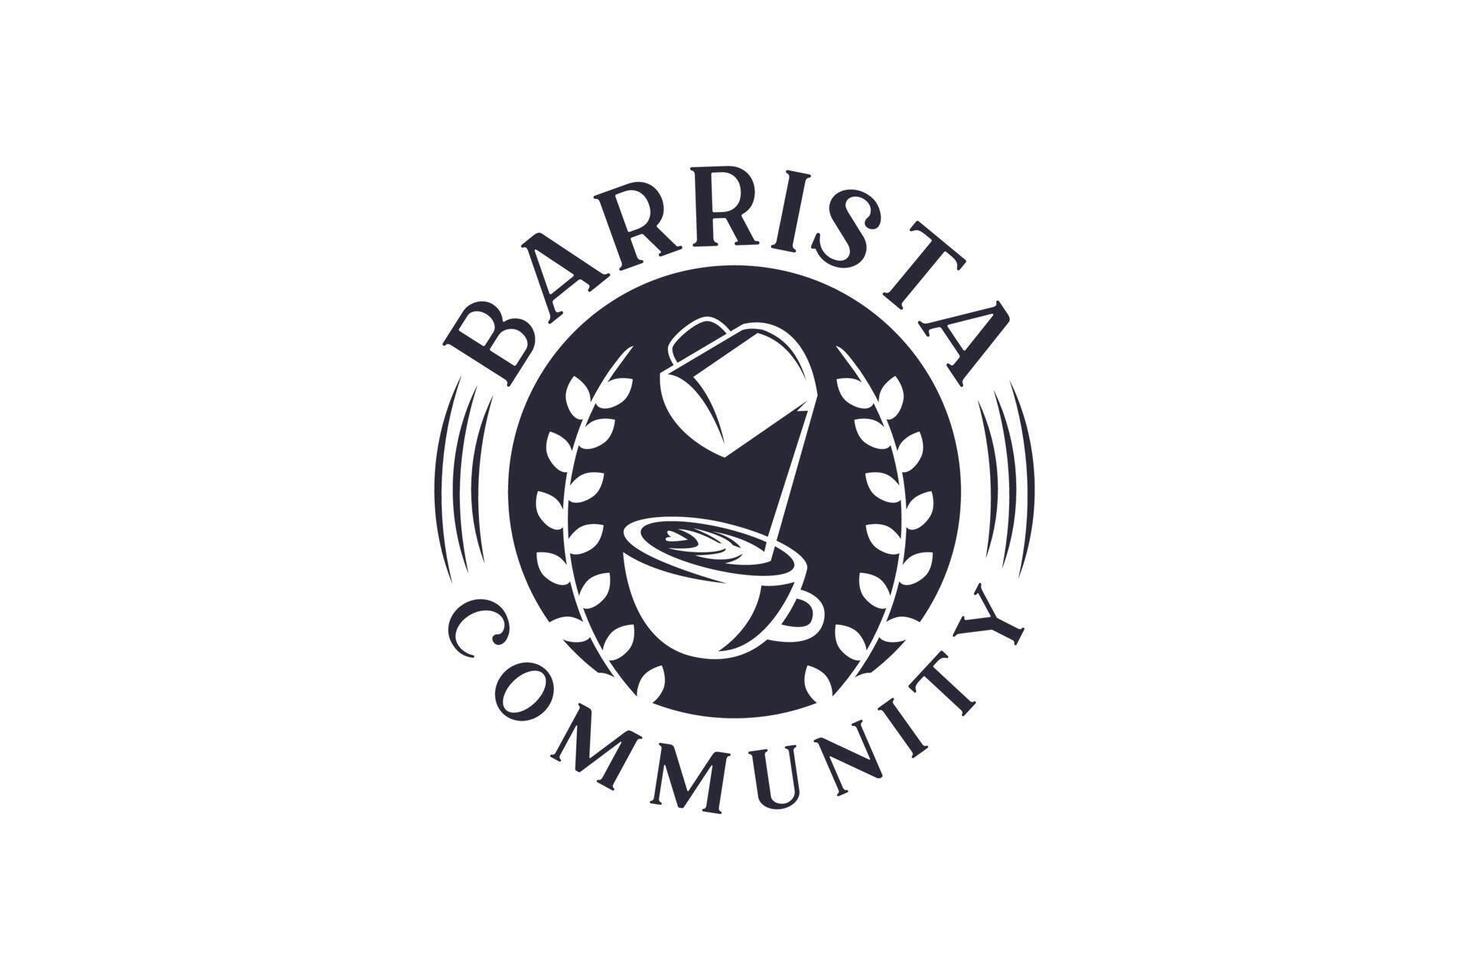 Barrista Community classic logo template vector